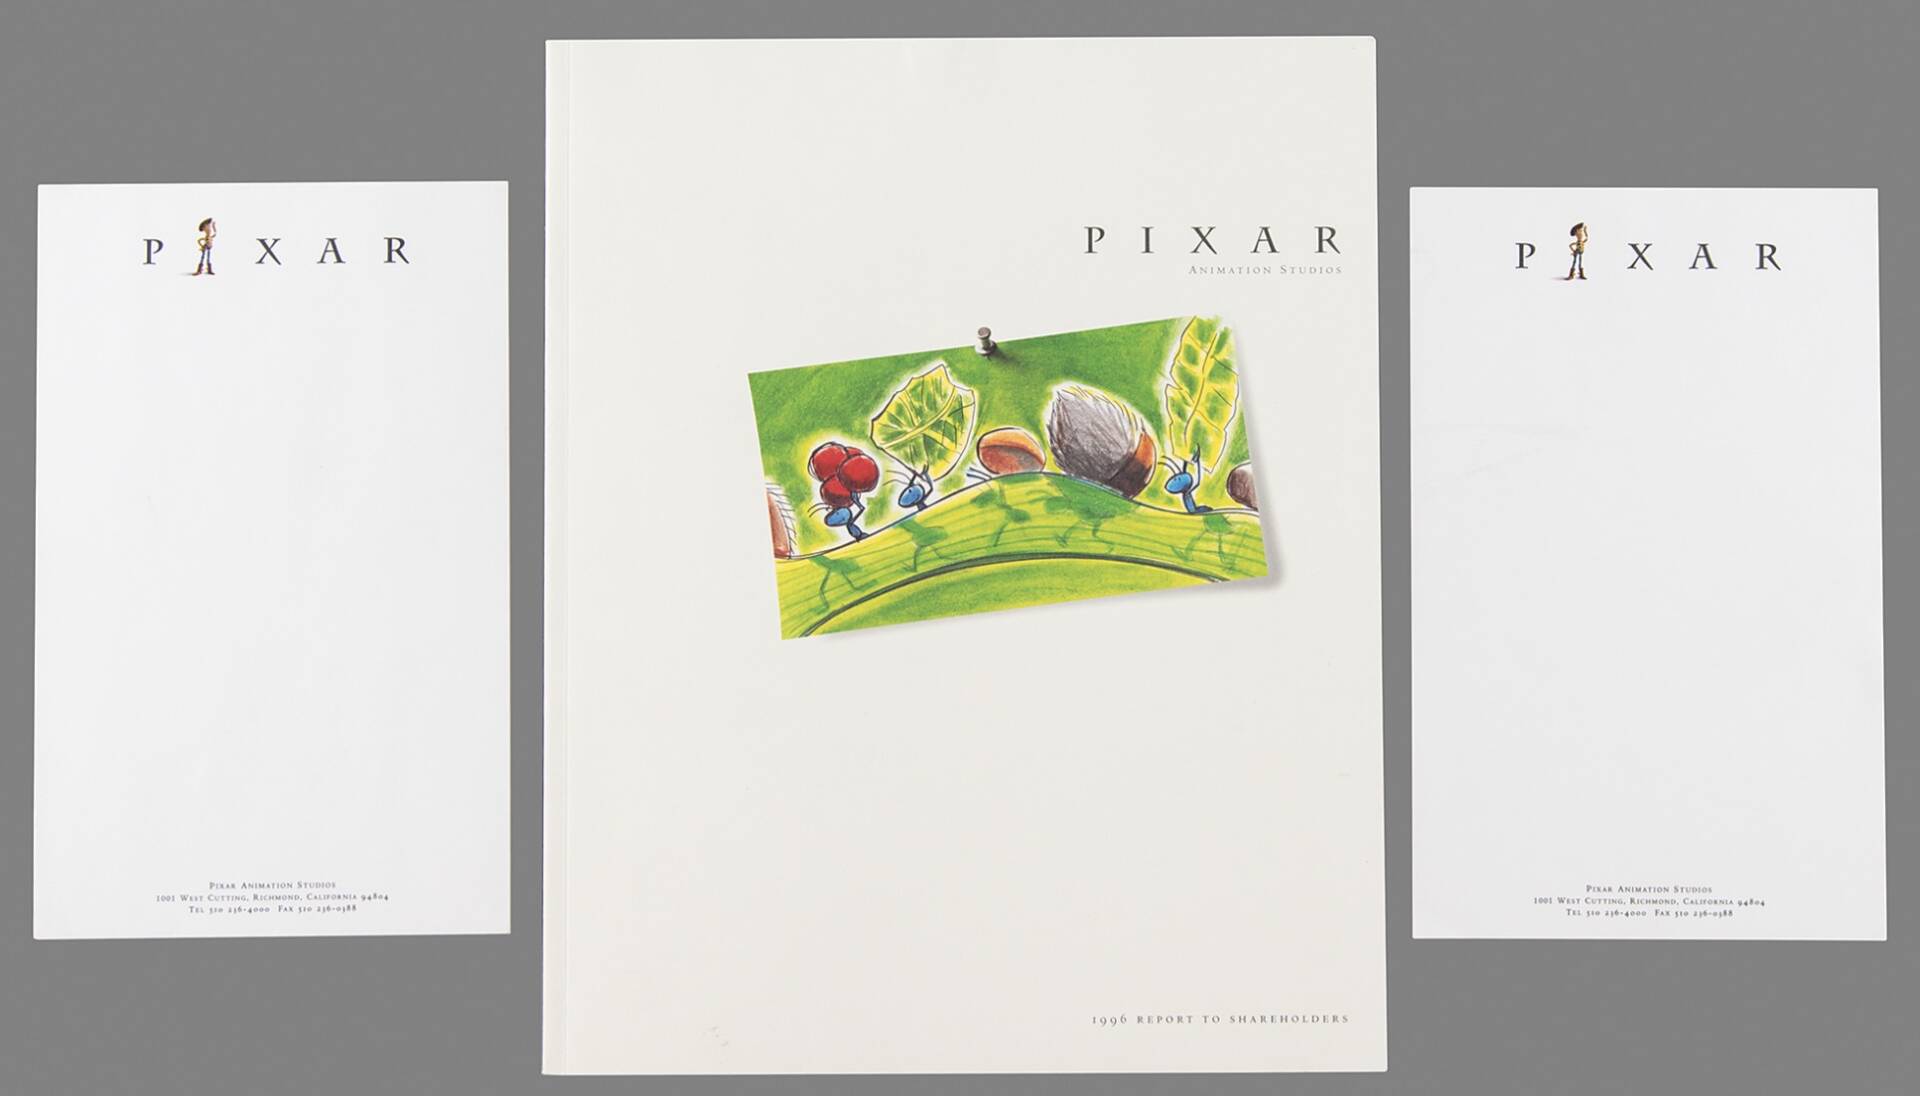 Vizitka Steva Jobsa Pixar